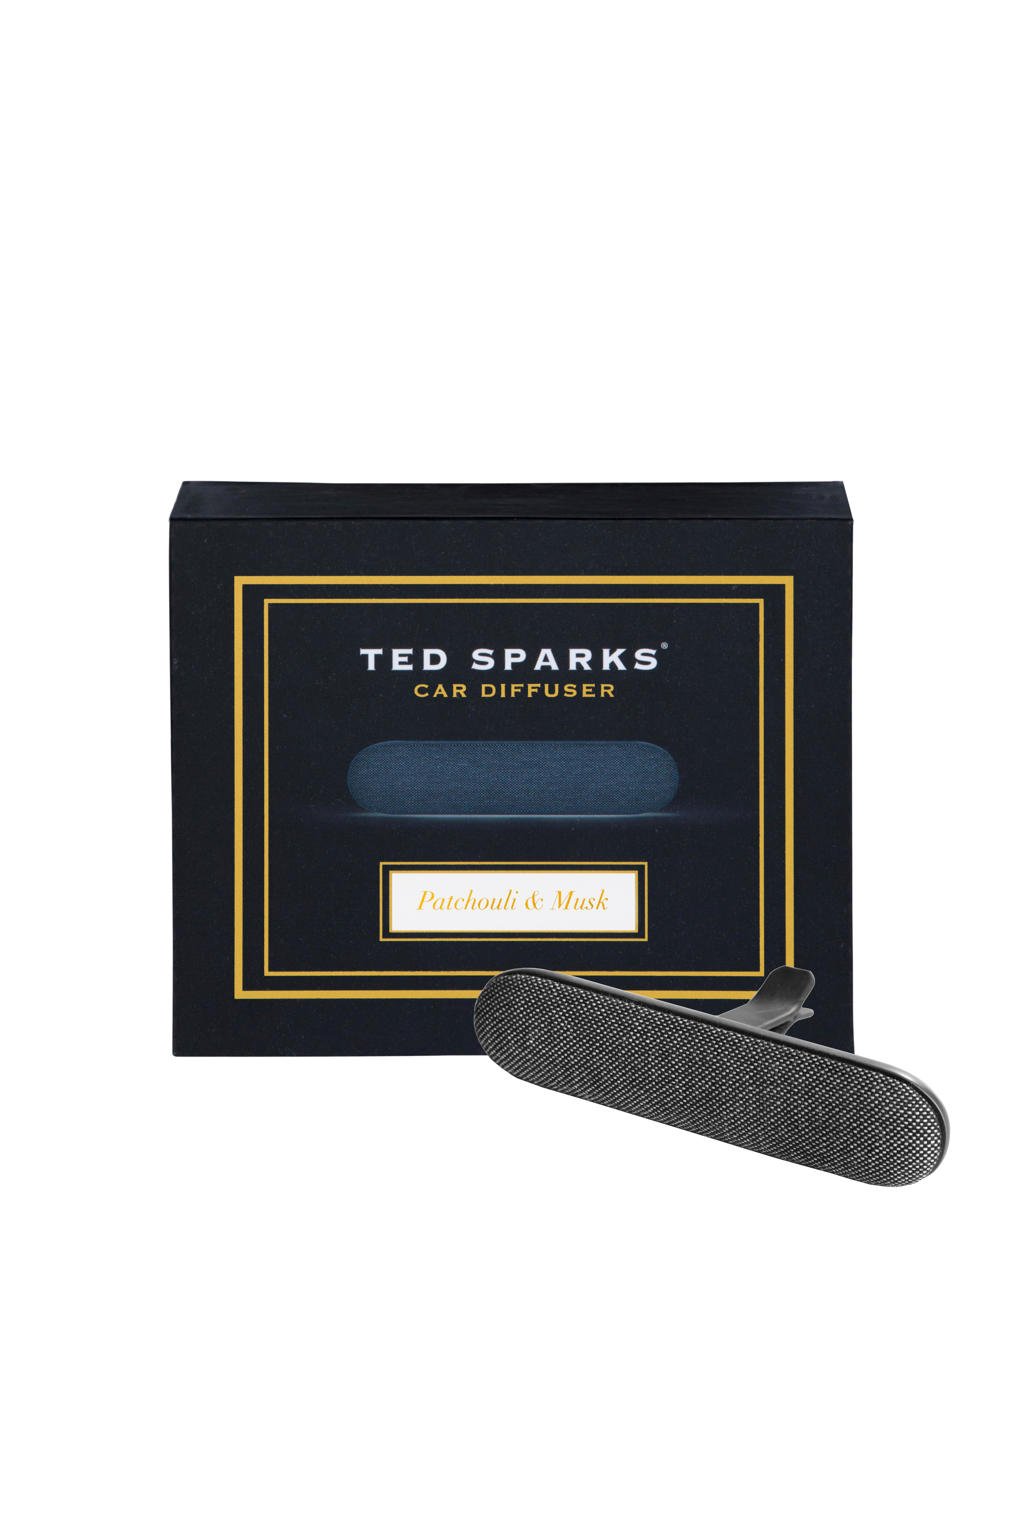 Ted Sparks autoparfum - Patchouli & Musk